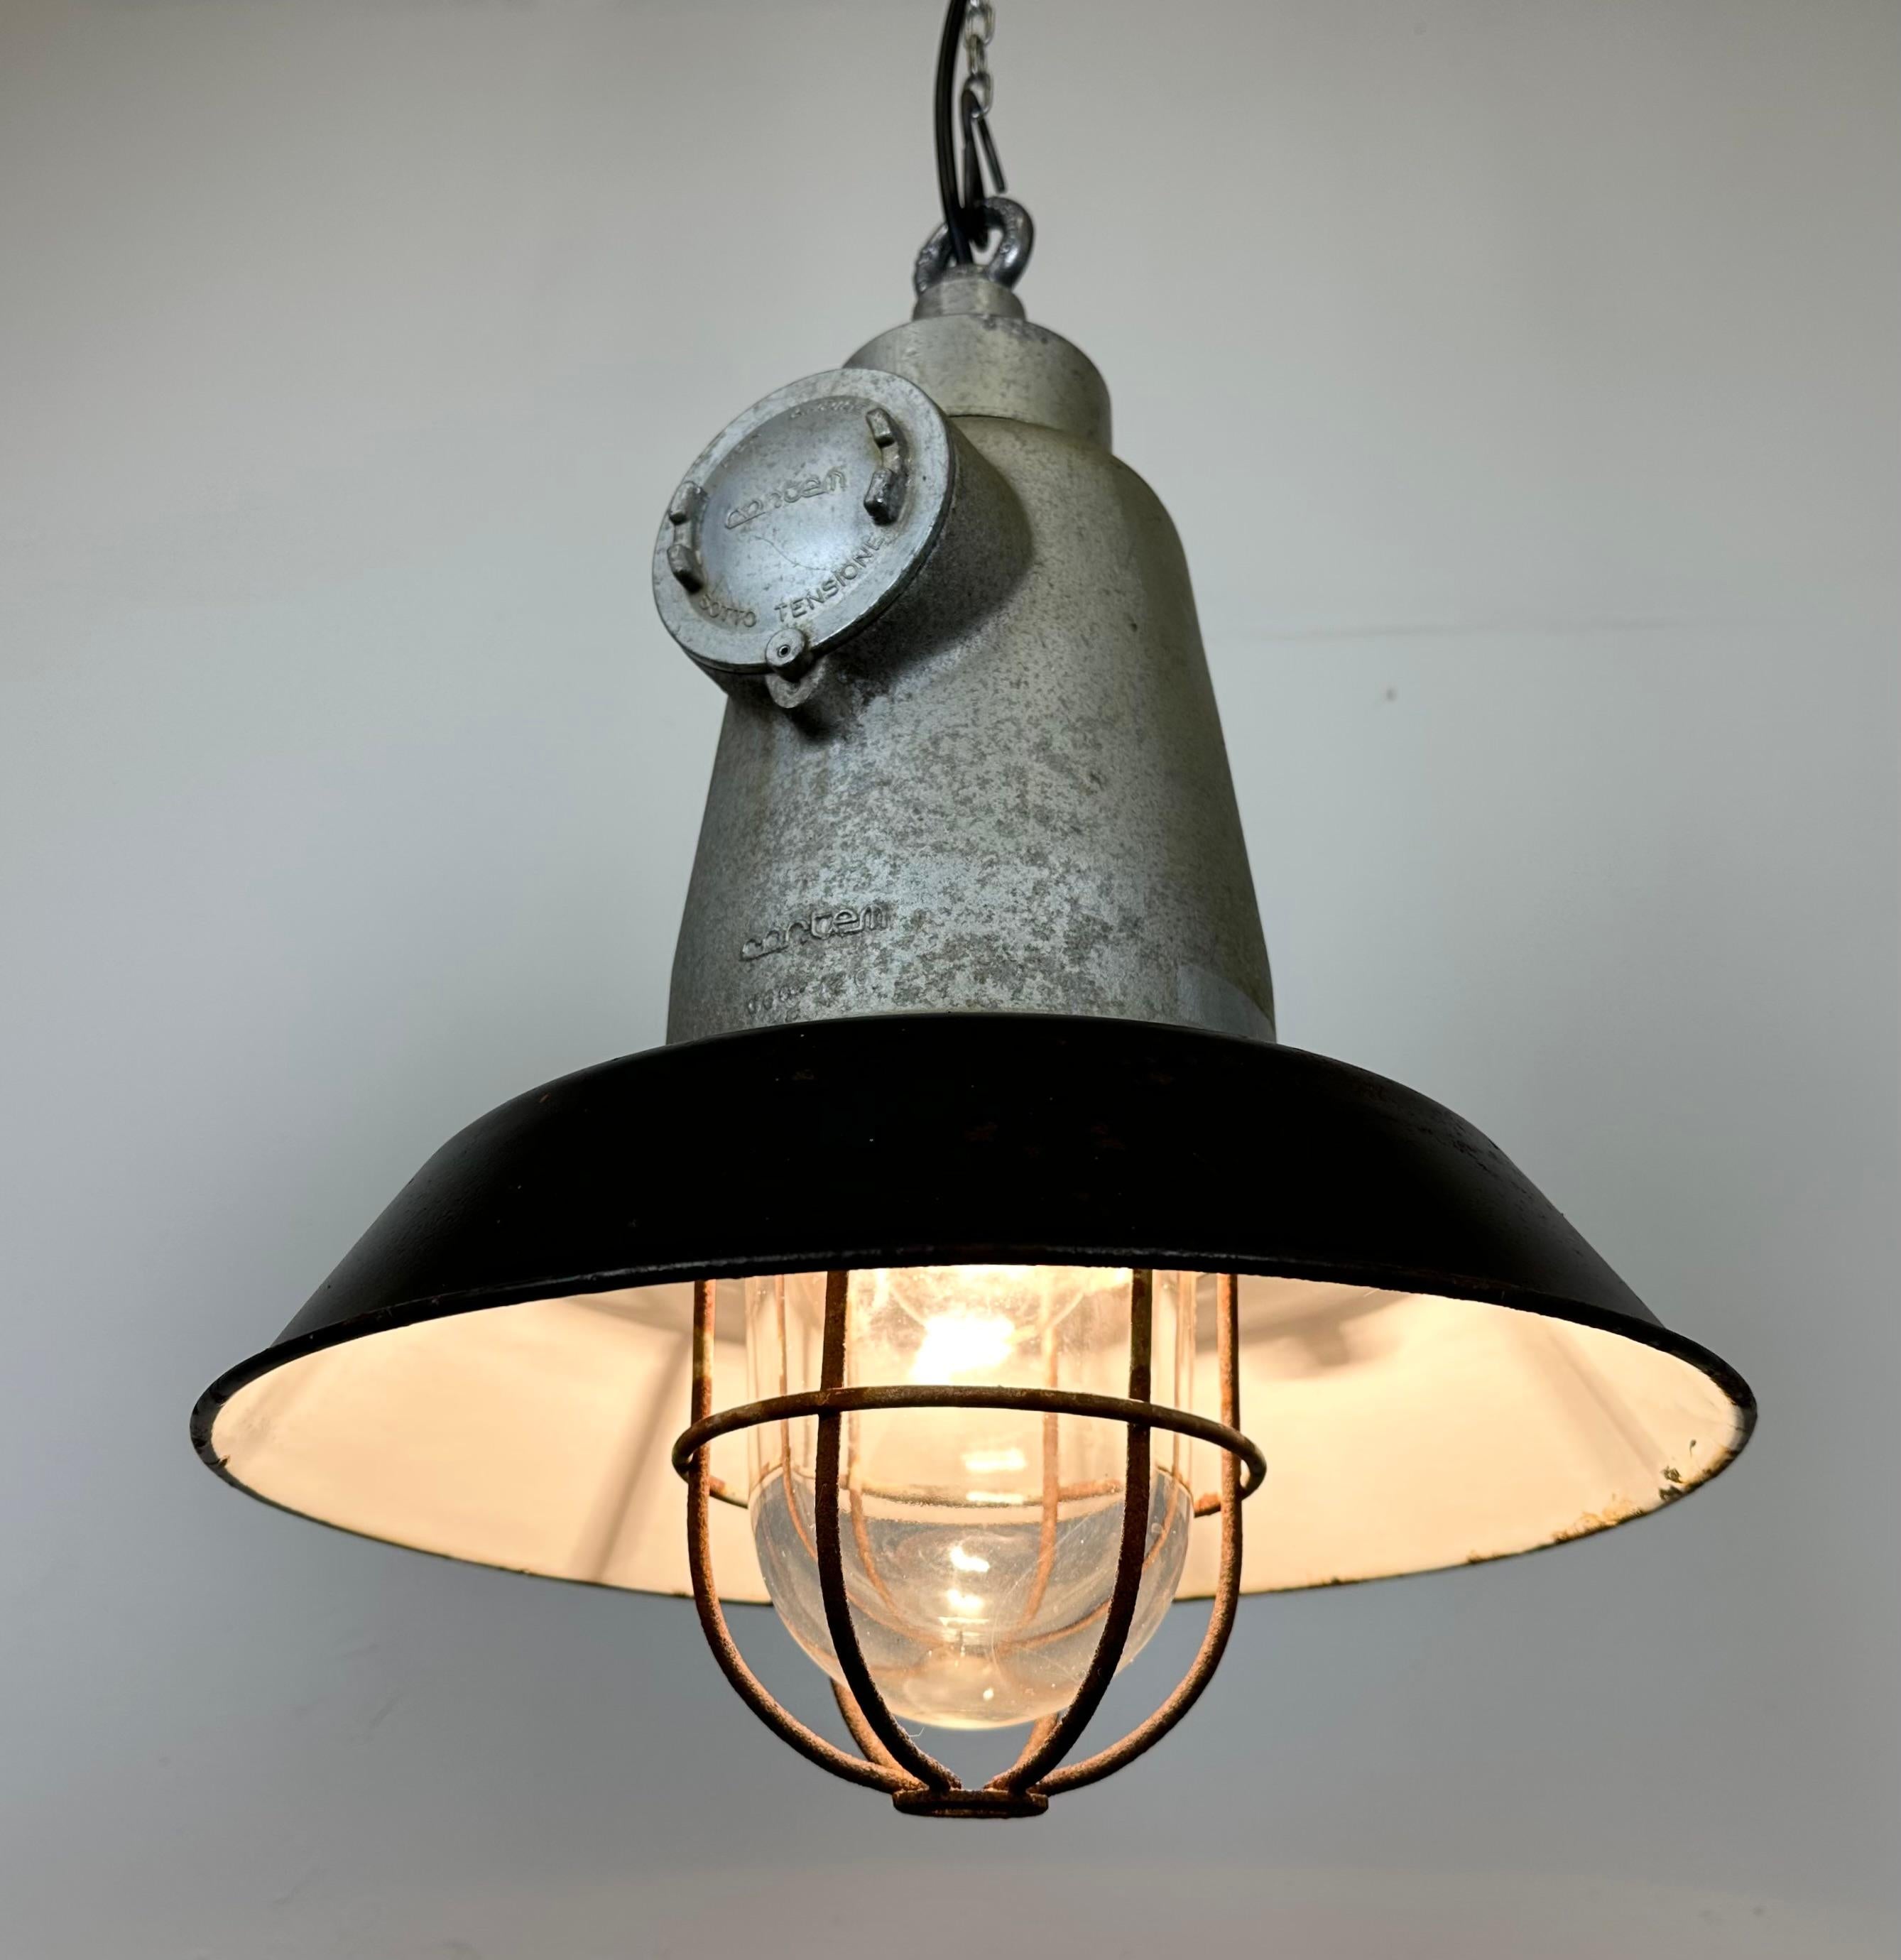 Italian Industrial Black Enamel Cage Pendant Light from Cortem, 1960s For Sale 9